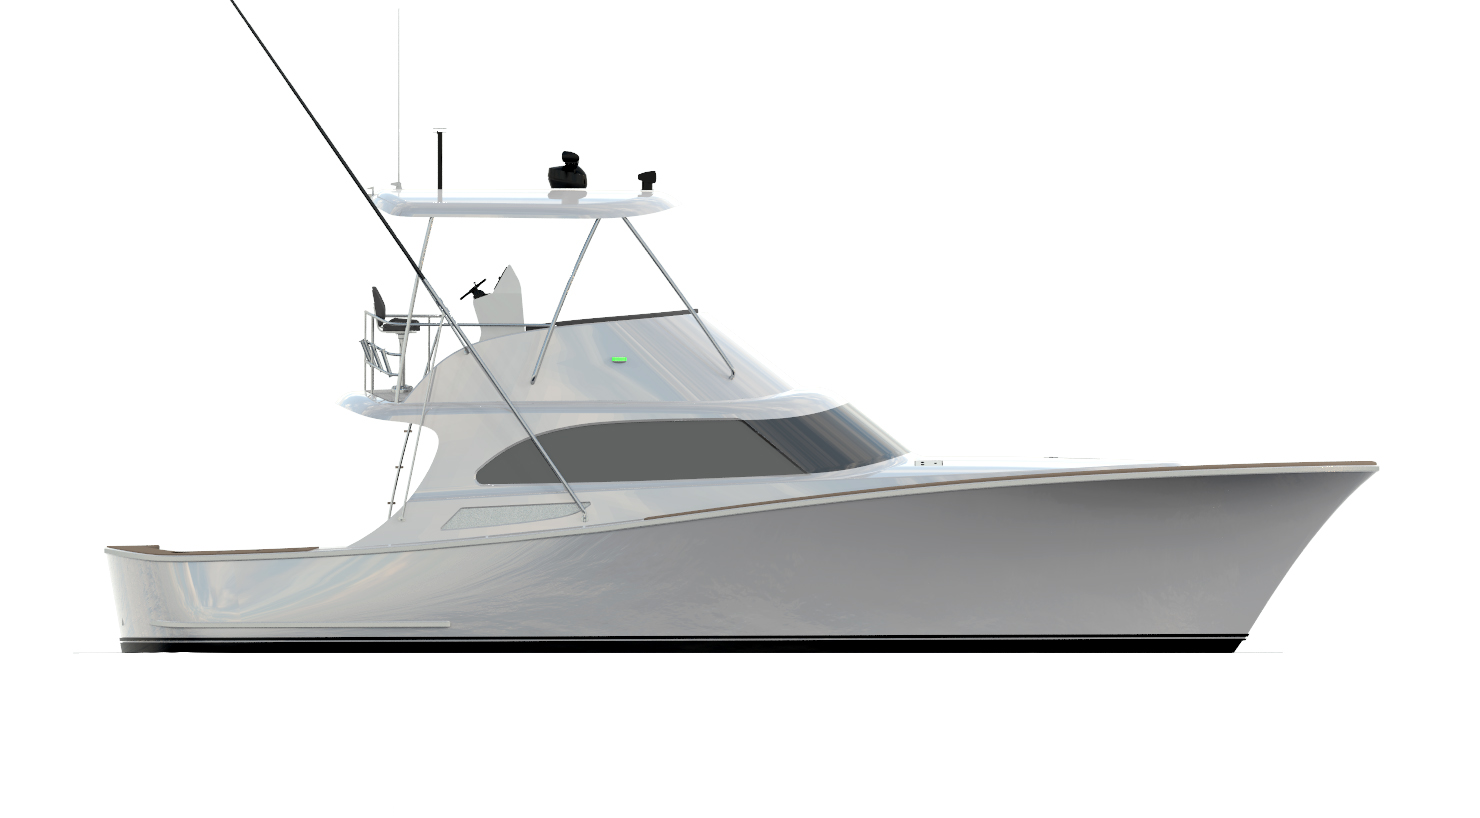 NorthCape Custom 43' boat
